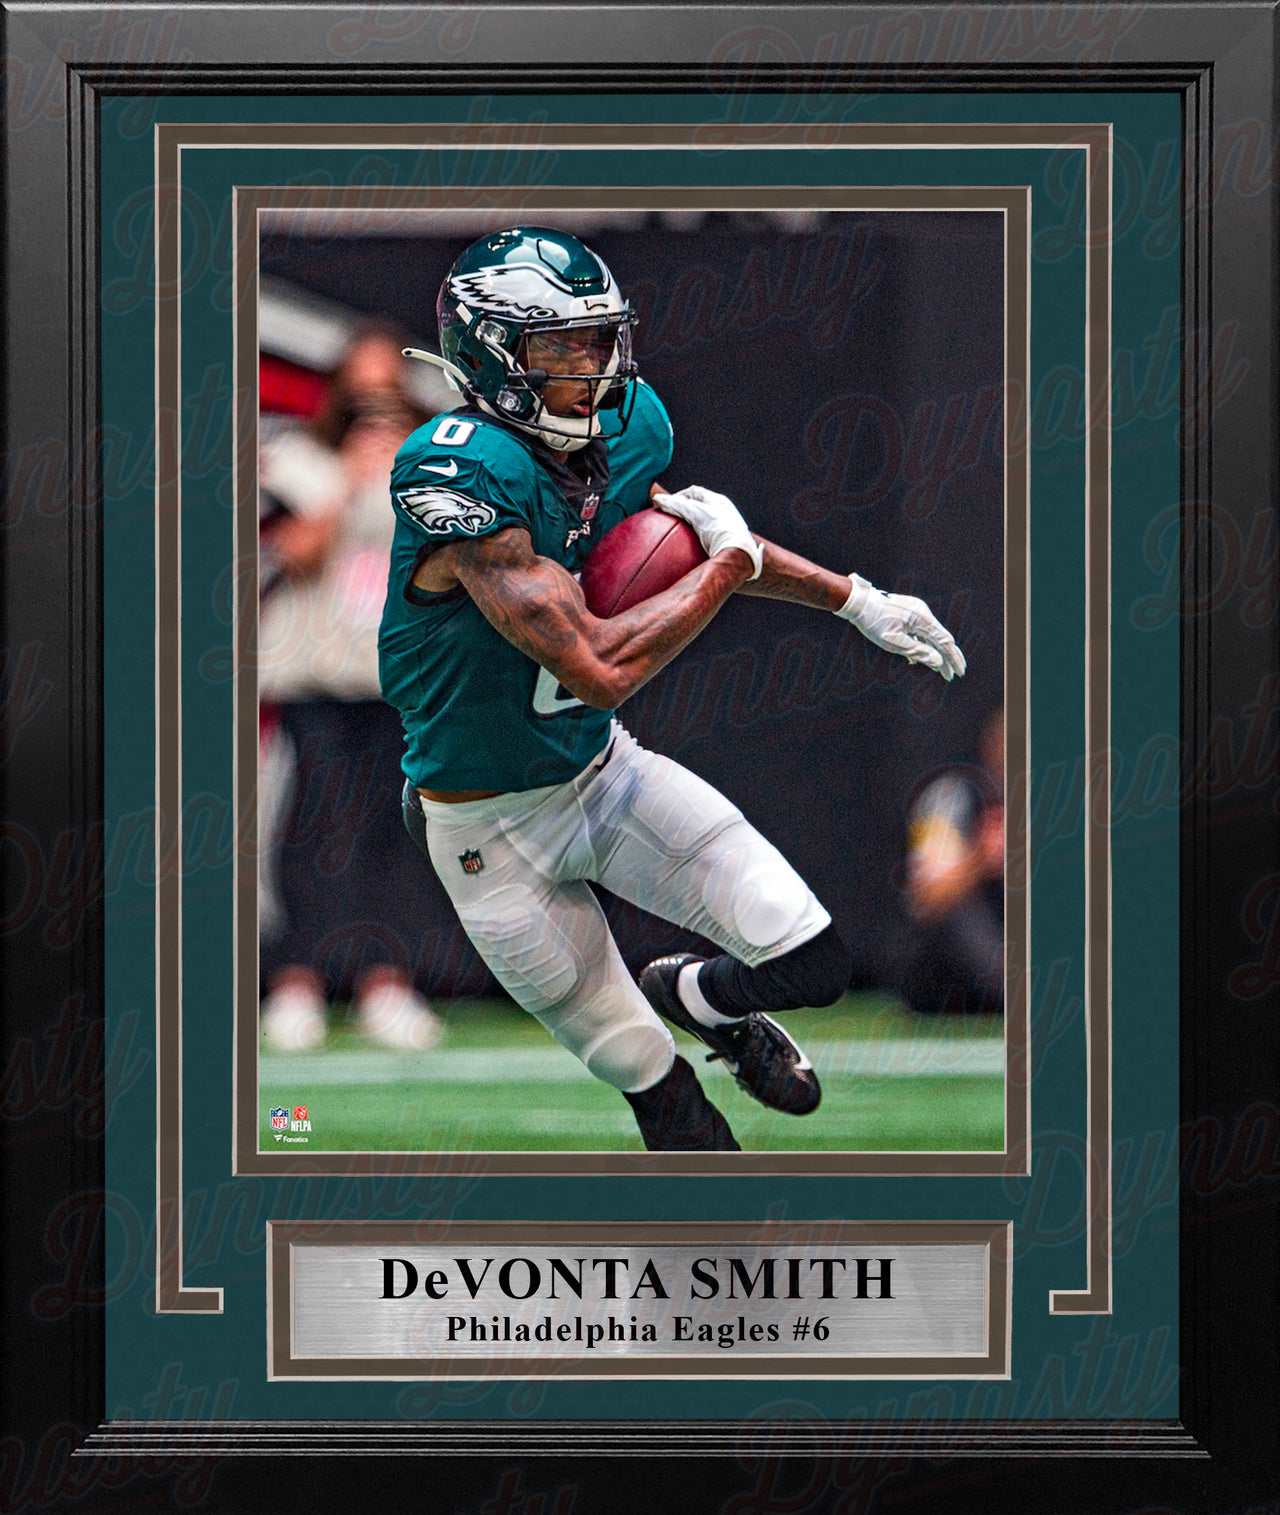 DeVonta Smith in Action Philadelphia Eagles 8" x 10" Framed Football Photo - Dynasty Sports & Framing 